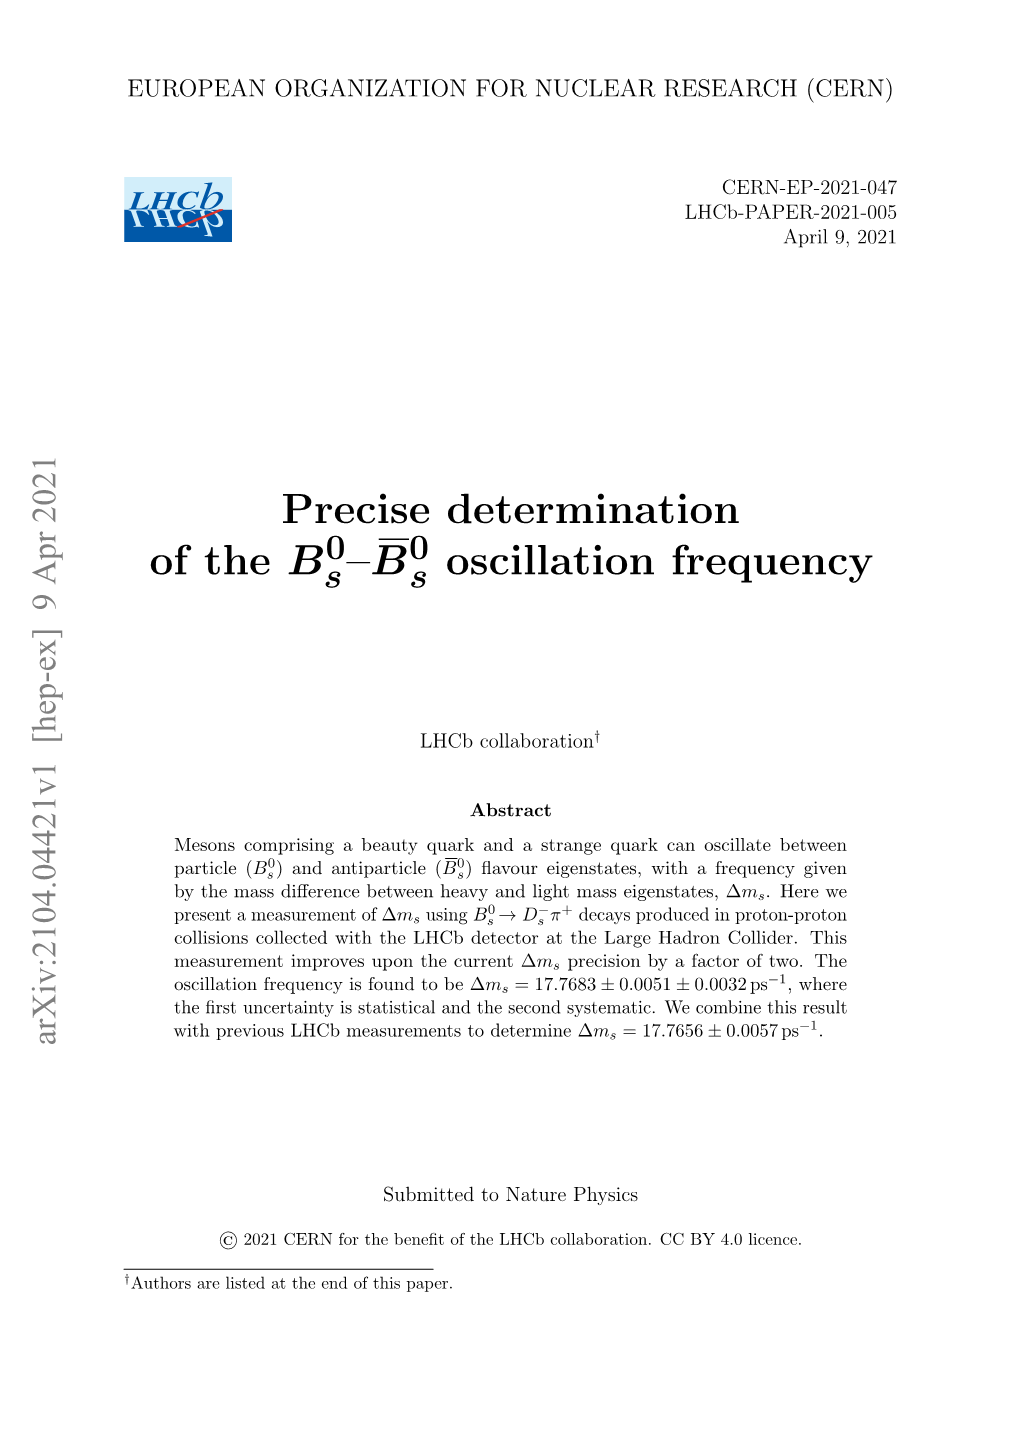 Precise Determination of the B0santib0s Oscillation Frequency